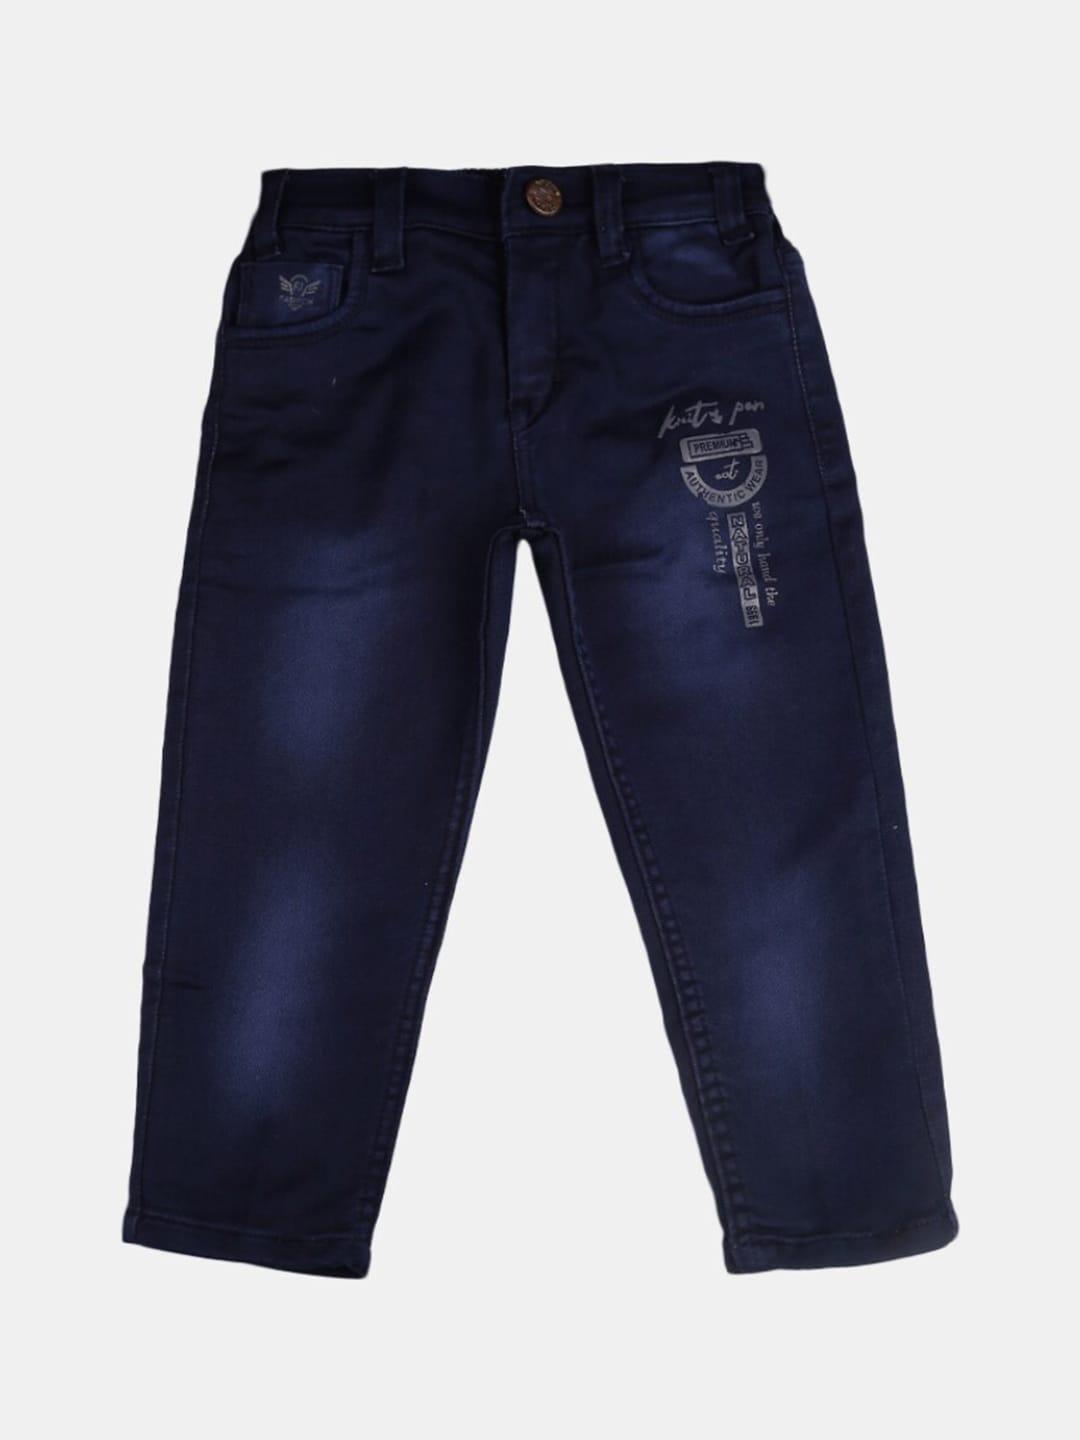 v-mart-boys-navy-blue-printed-easy-wash-trousers